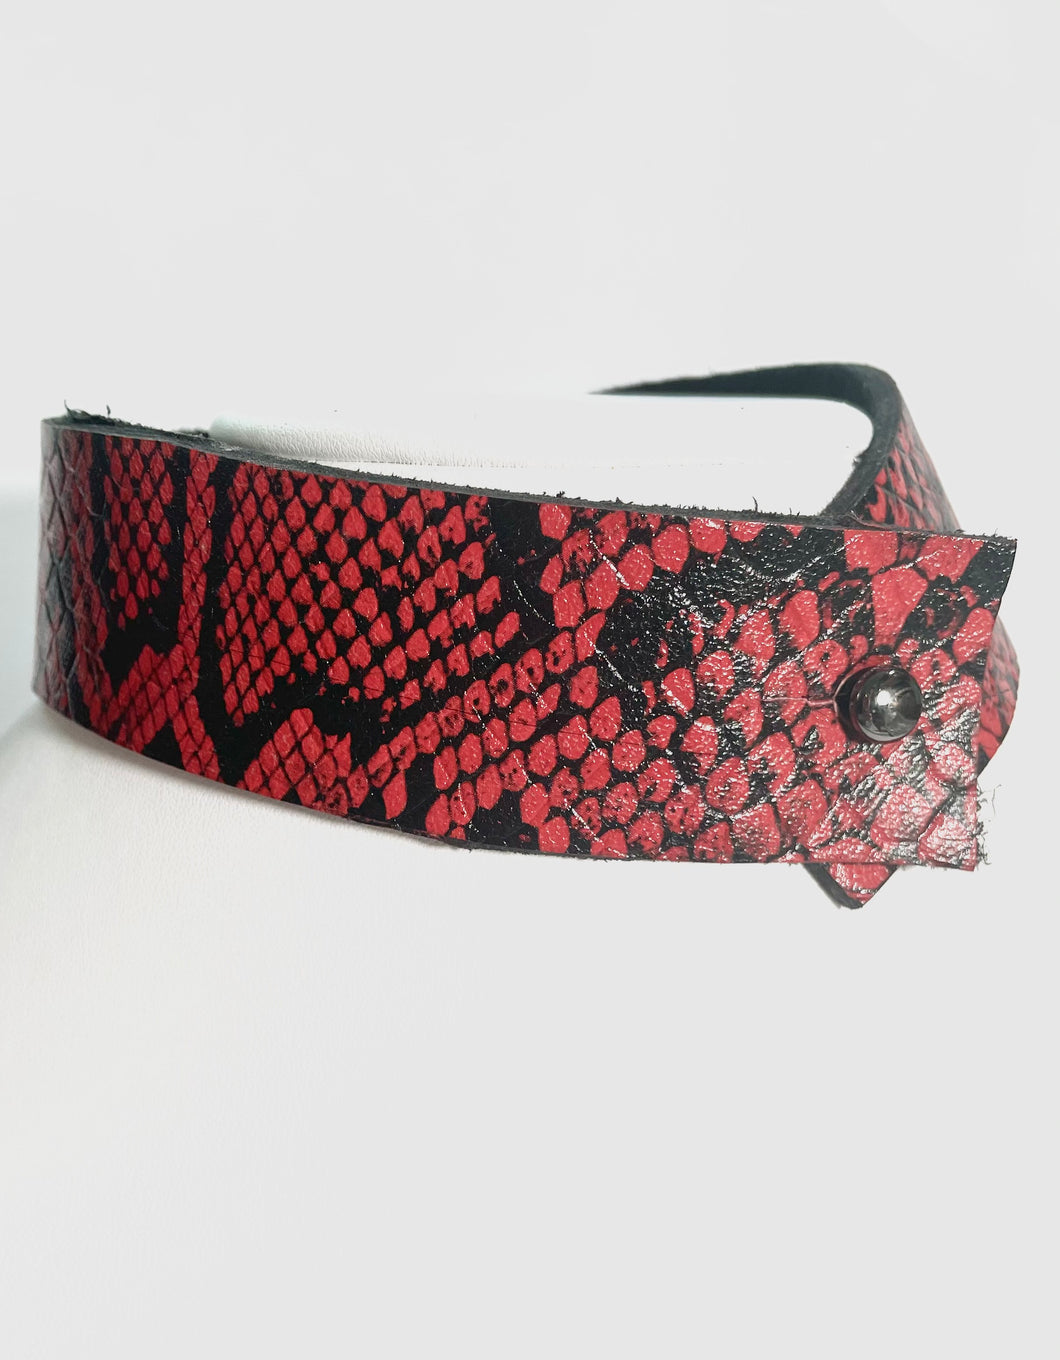 Red Snakeskin Choker/Necklace